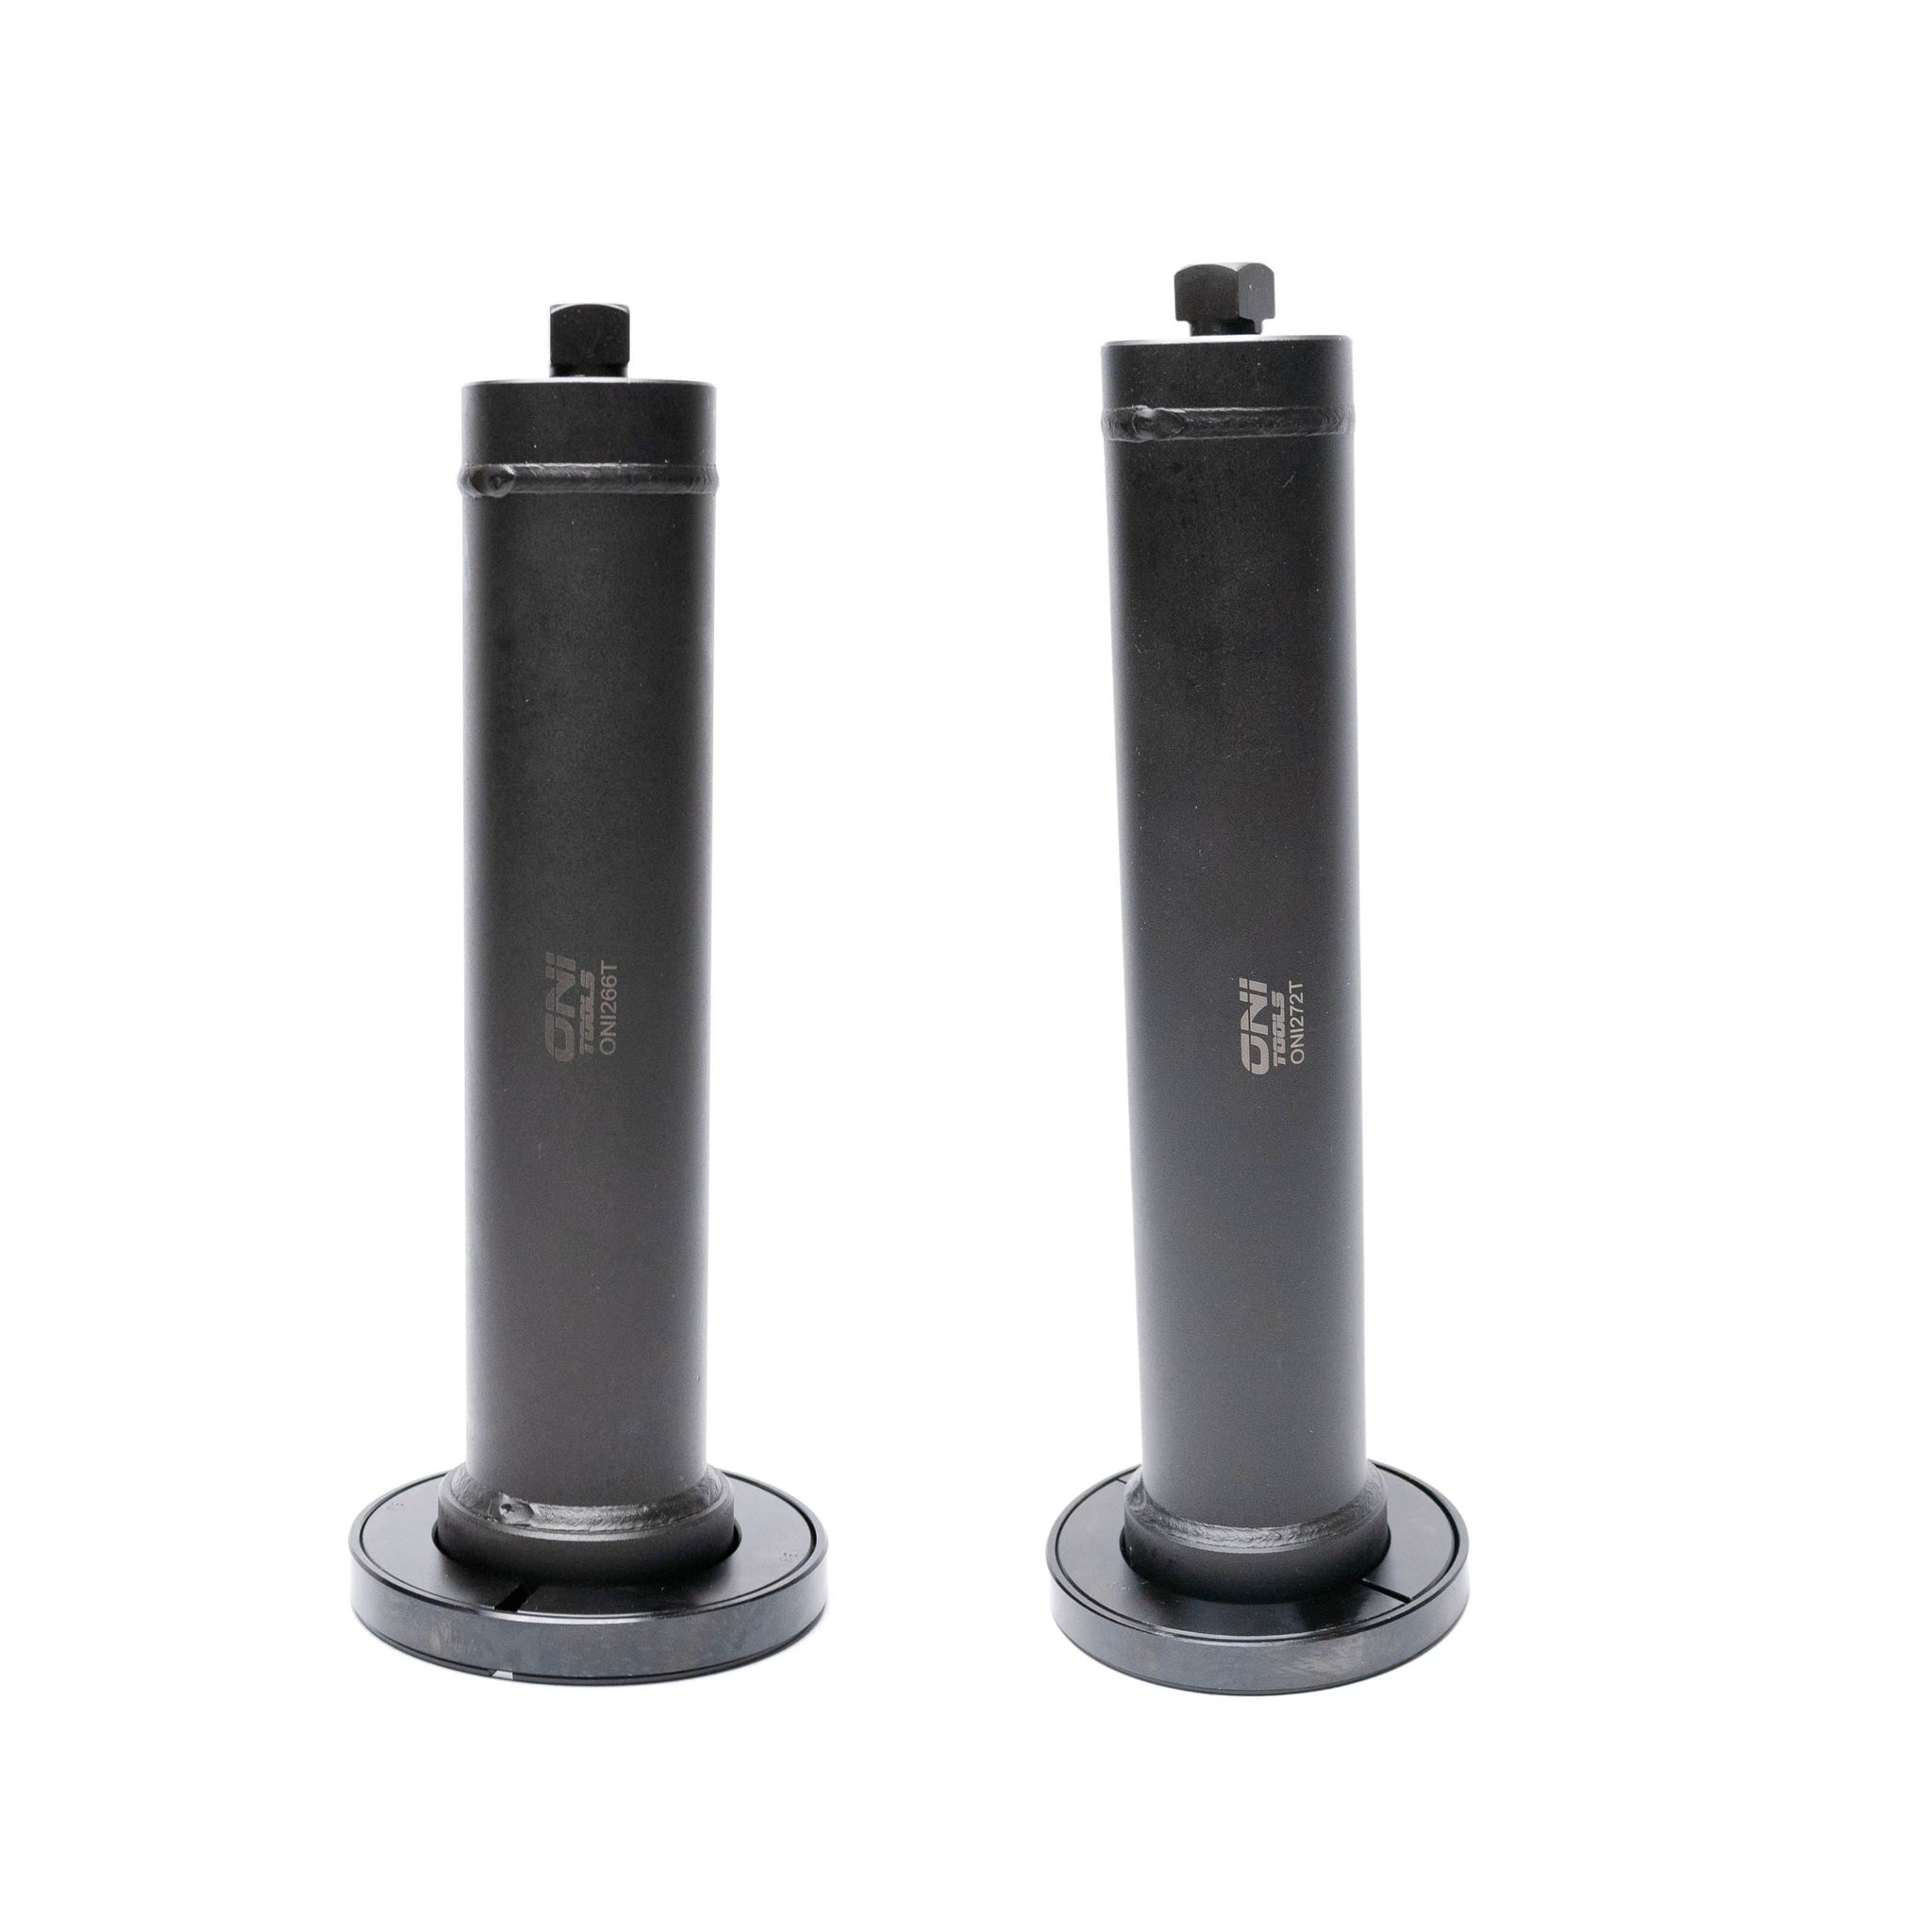 Eaton Fuller Countershaft Bearing Puller 210 Series Alternative to M40 —  Ferrum Tools